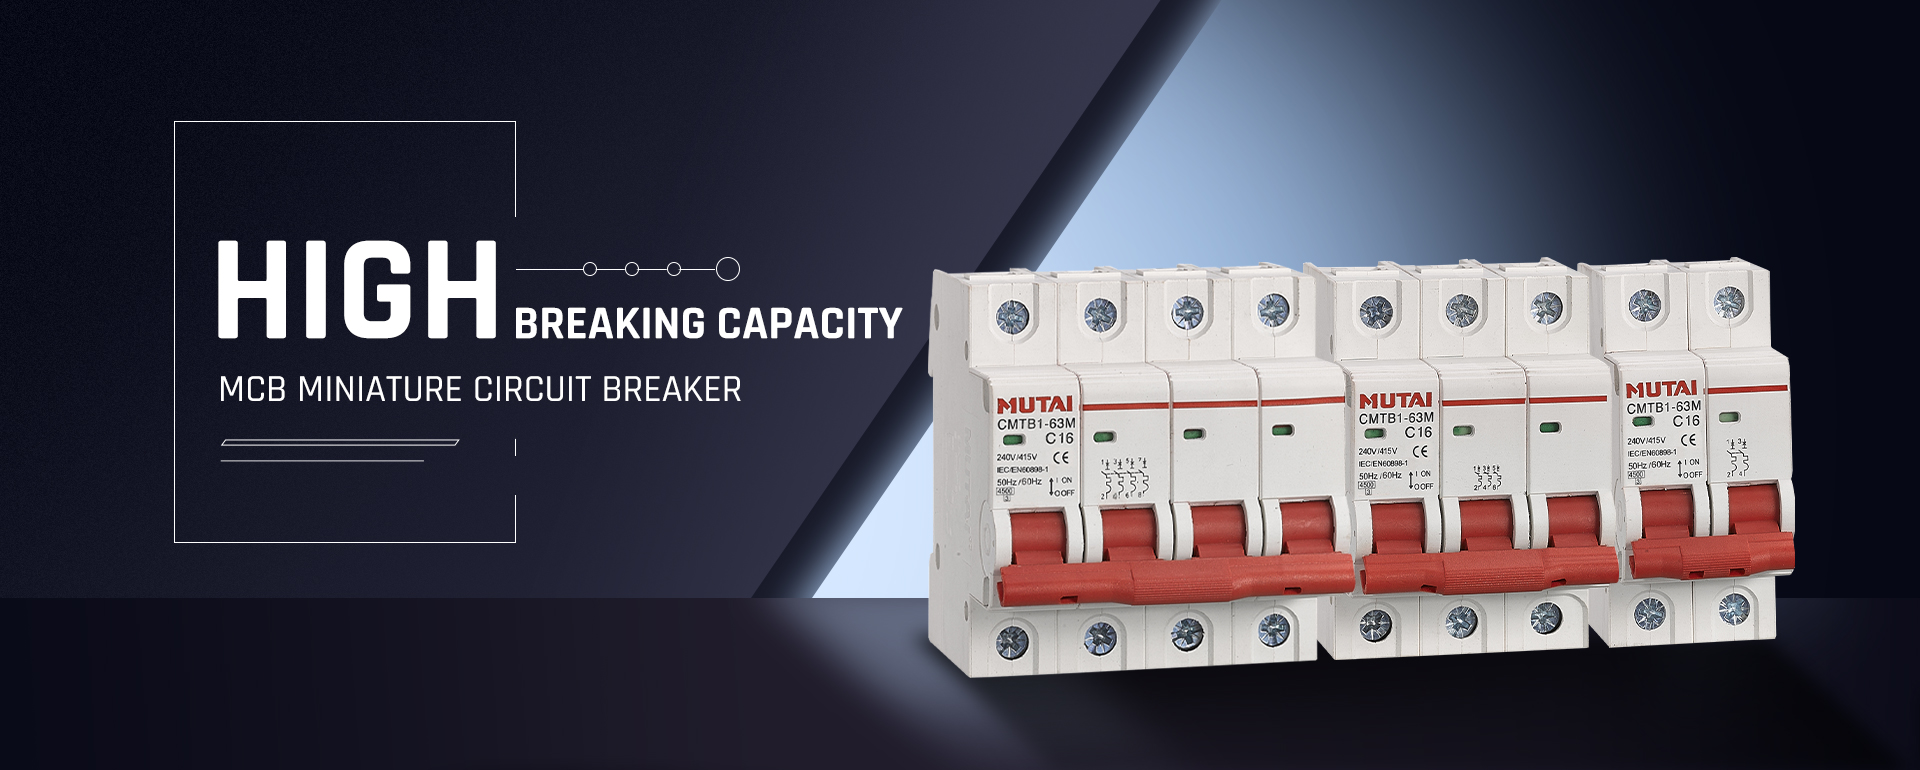 i-miniature-circuit-breaker-mcb